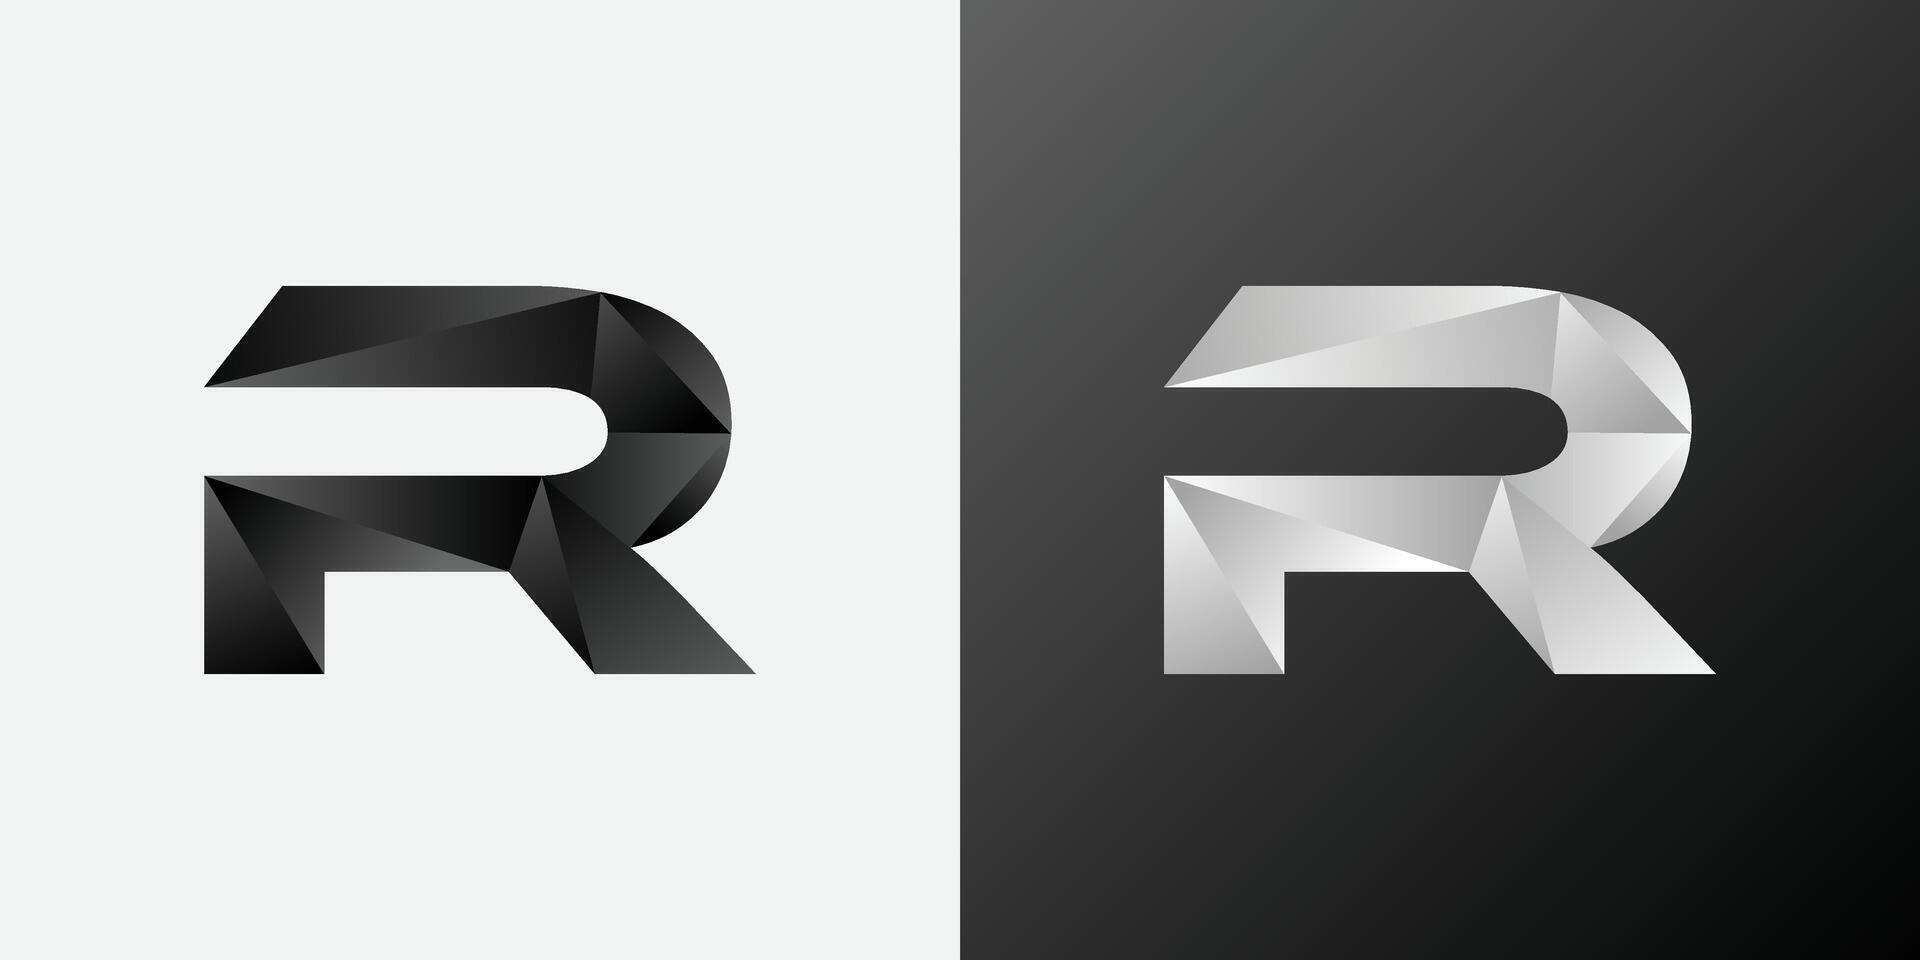 veelhoekige r logo ontwerp met zwart en wit kleur verloop. meetkundig r logo vector